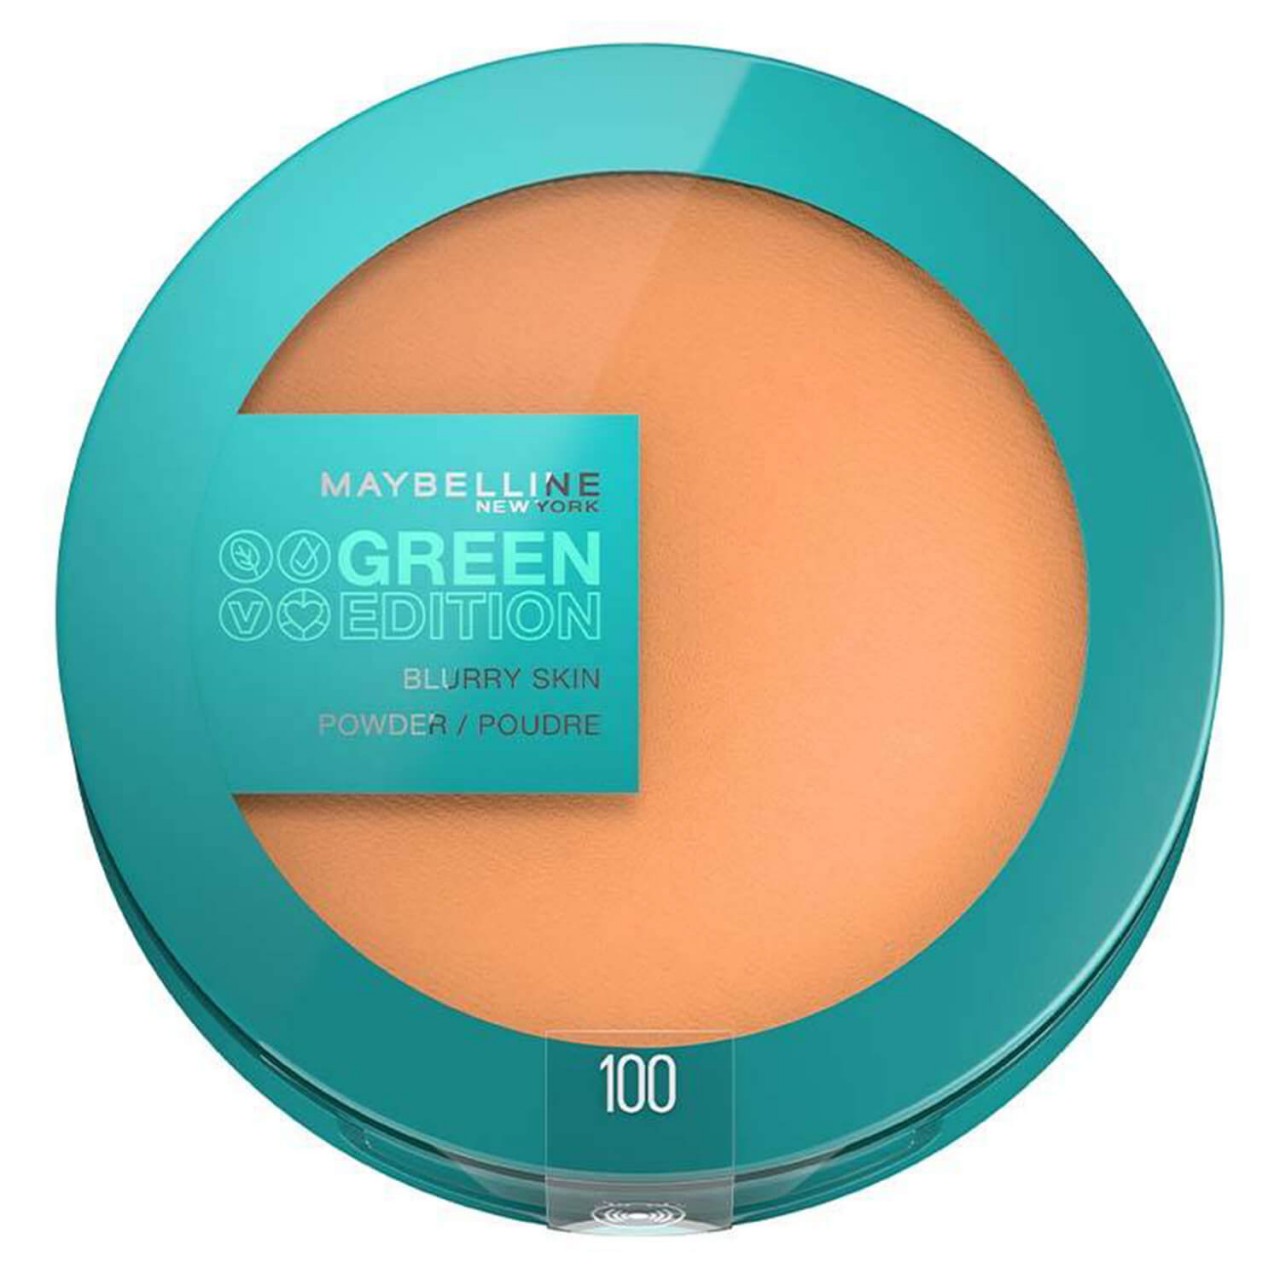 Maybelline NY Teint - Green Edition Blurry Skin Powder 100 von Maybelline New York